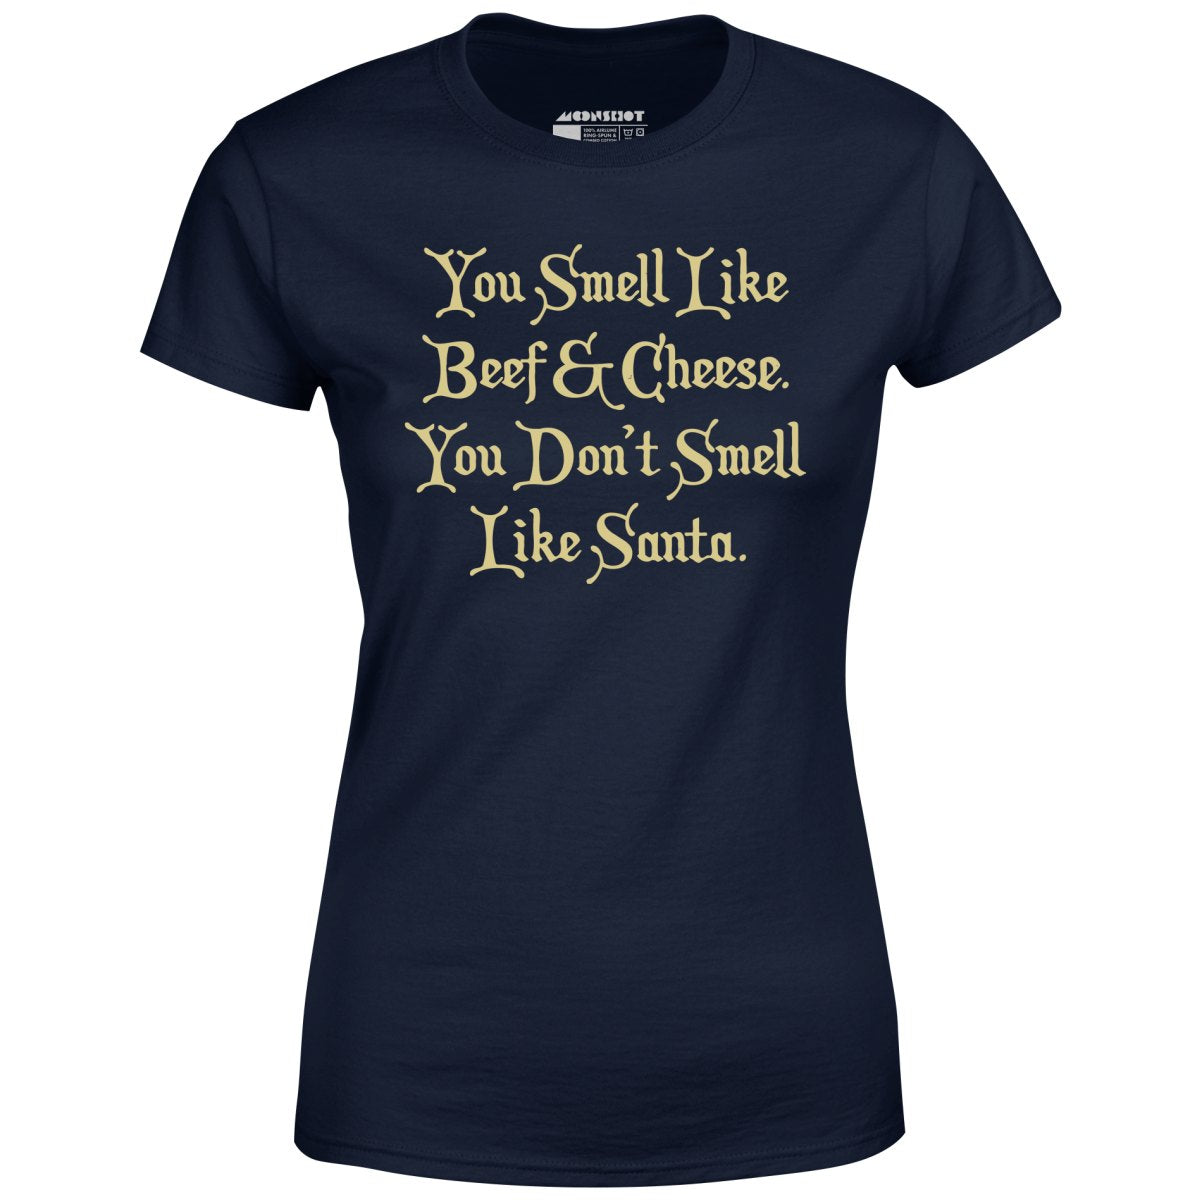 You Don't Smell Like Santa - Women's T-Shirt